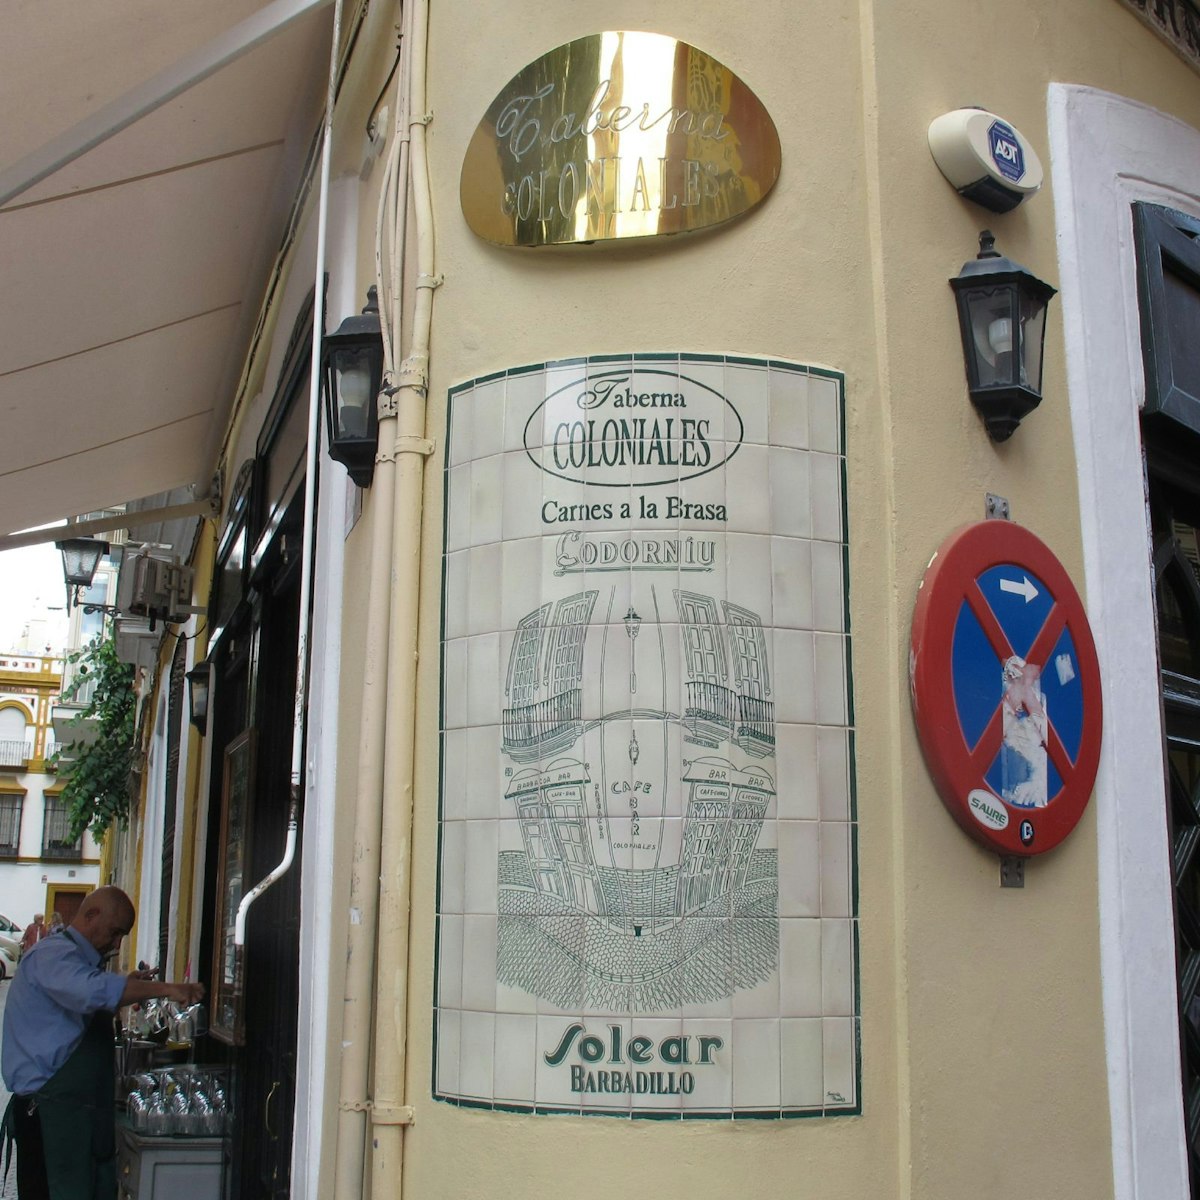 Taberna Coloniales San Pedro bar tiled sign.